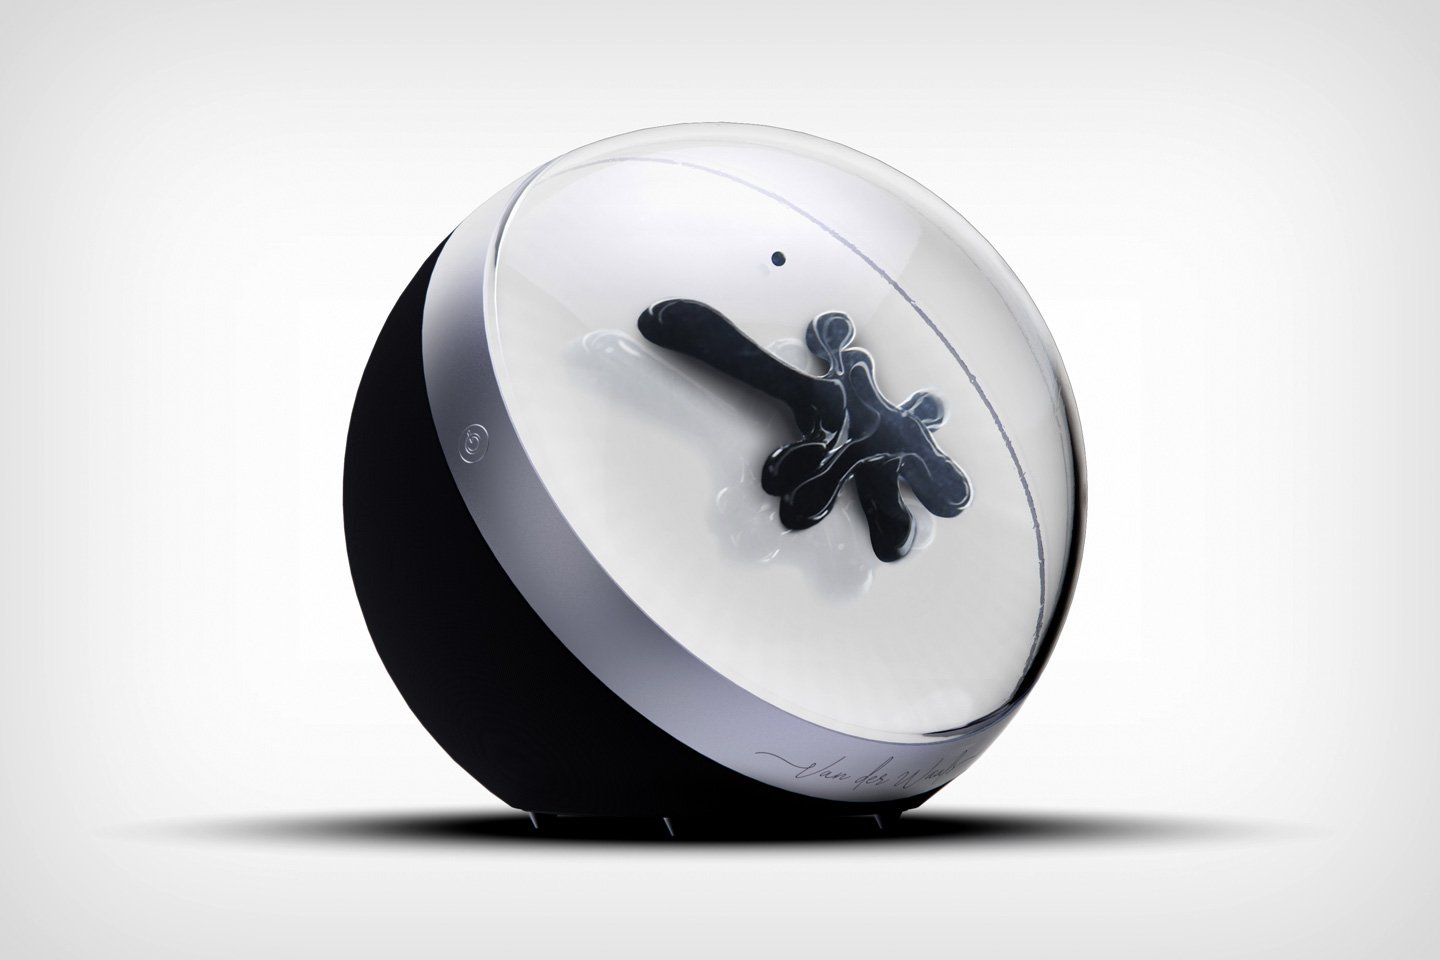 The Van der Waals ferrofluid speaker is like Windows Media Player visualizations on steroids